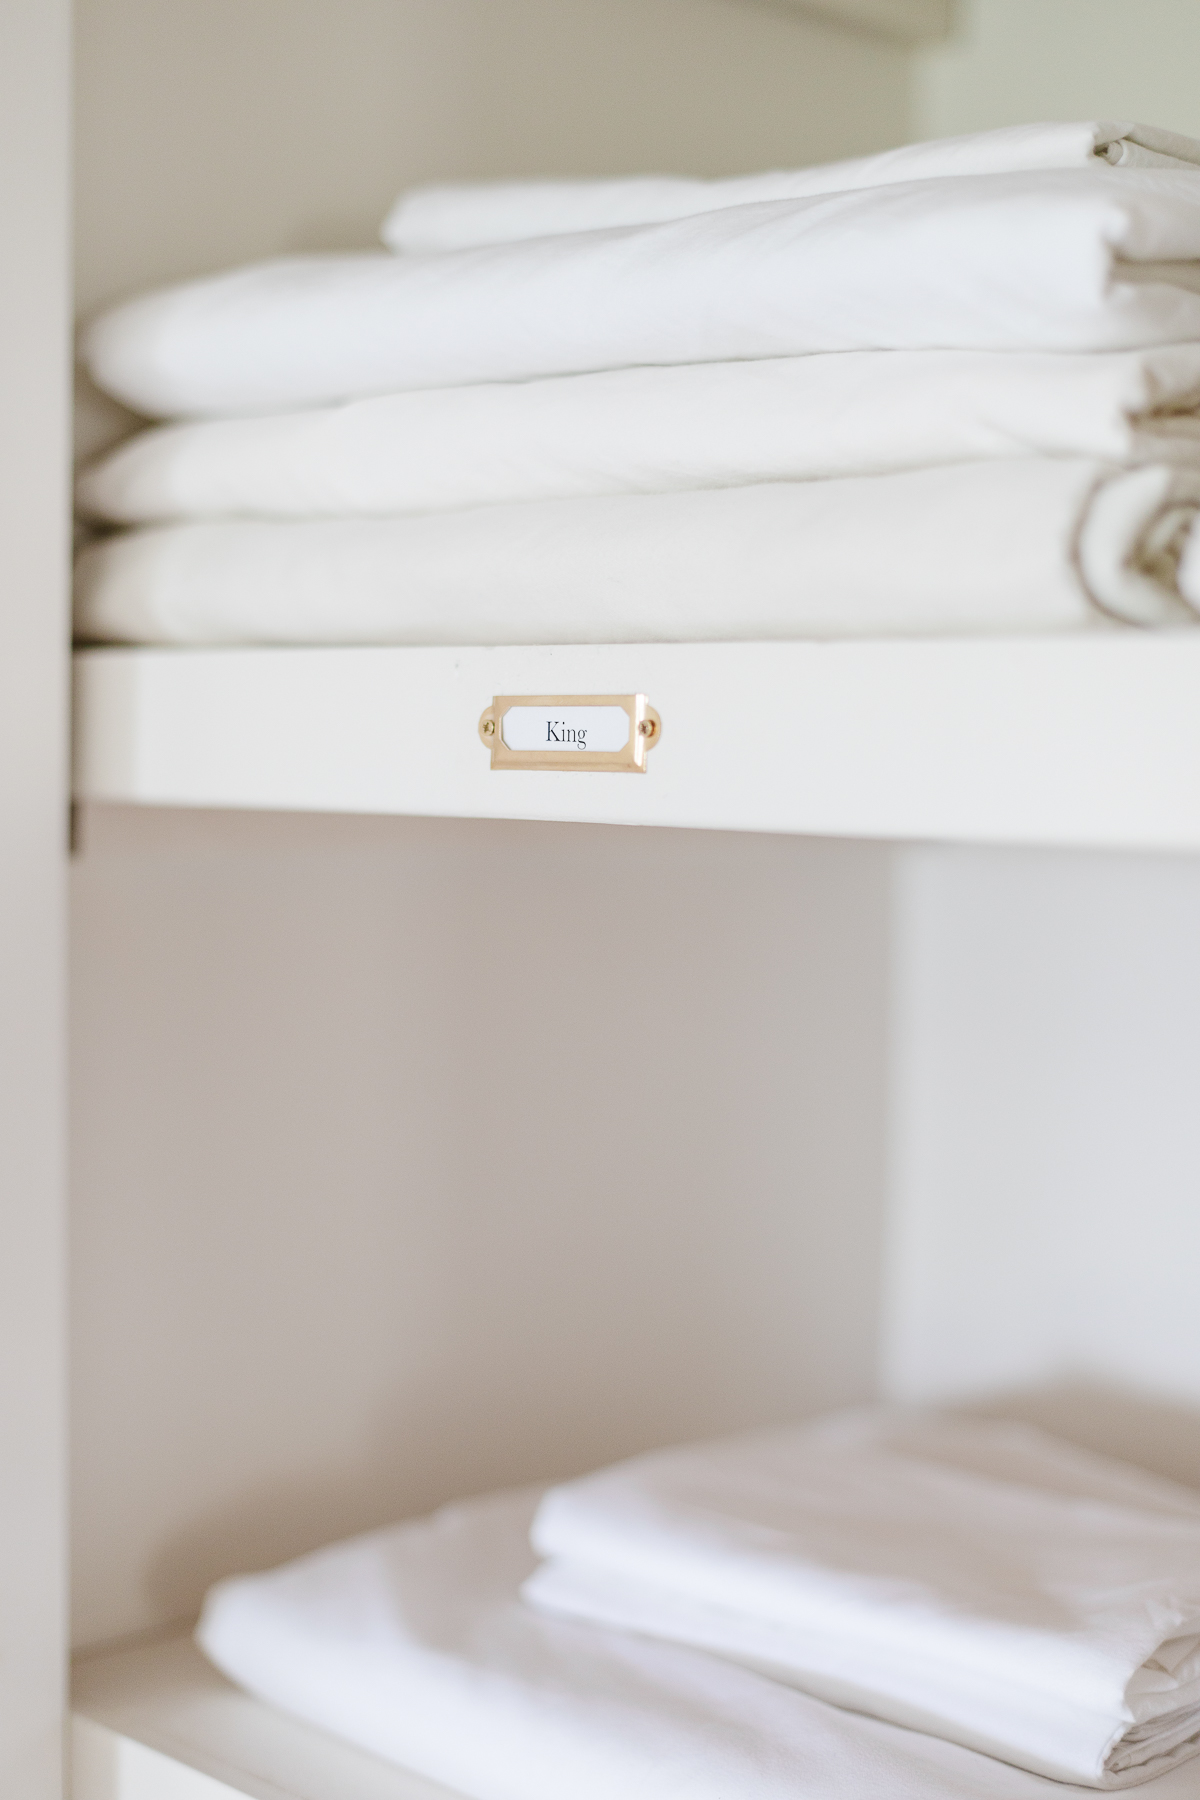 Linens neatly arranged on a shelf in a linen closet.